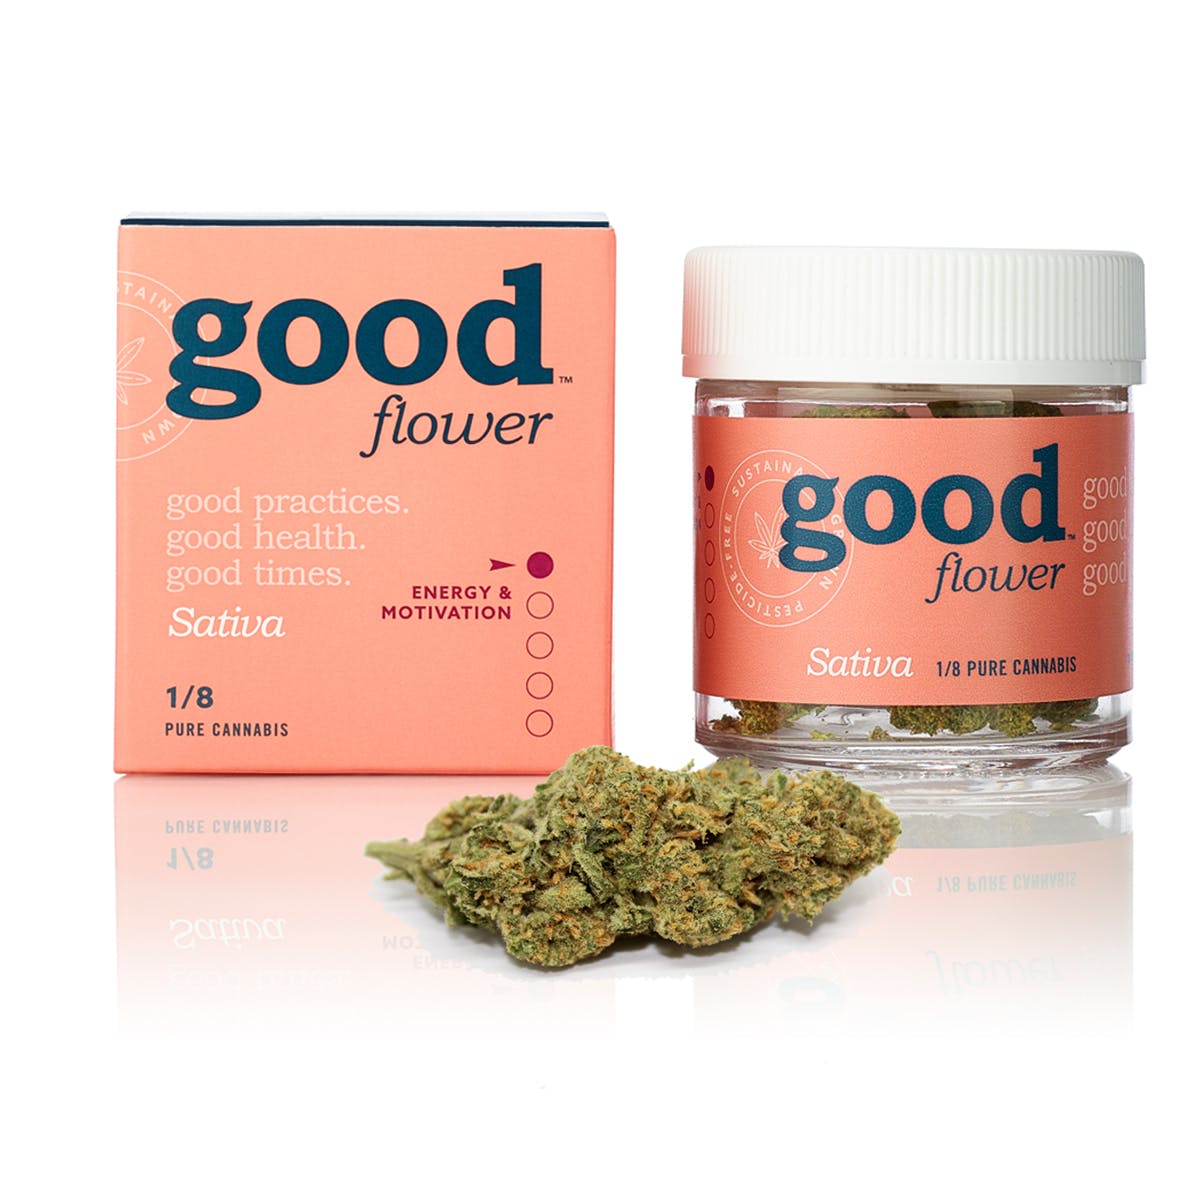 goodflower: Sativa